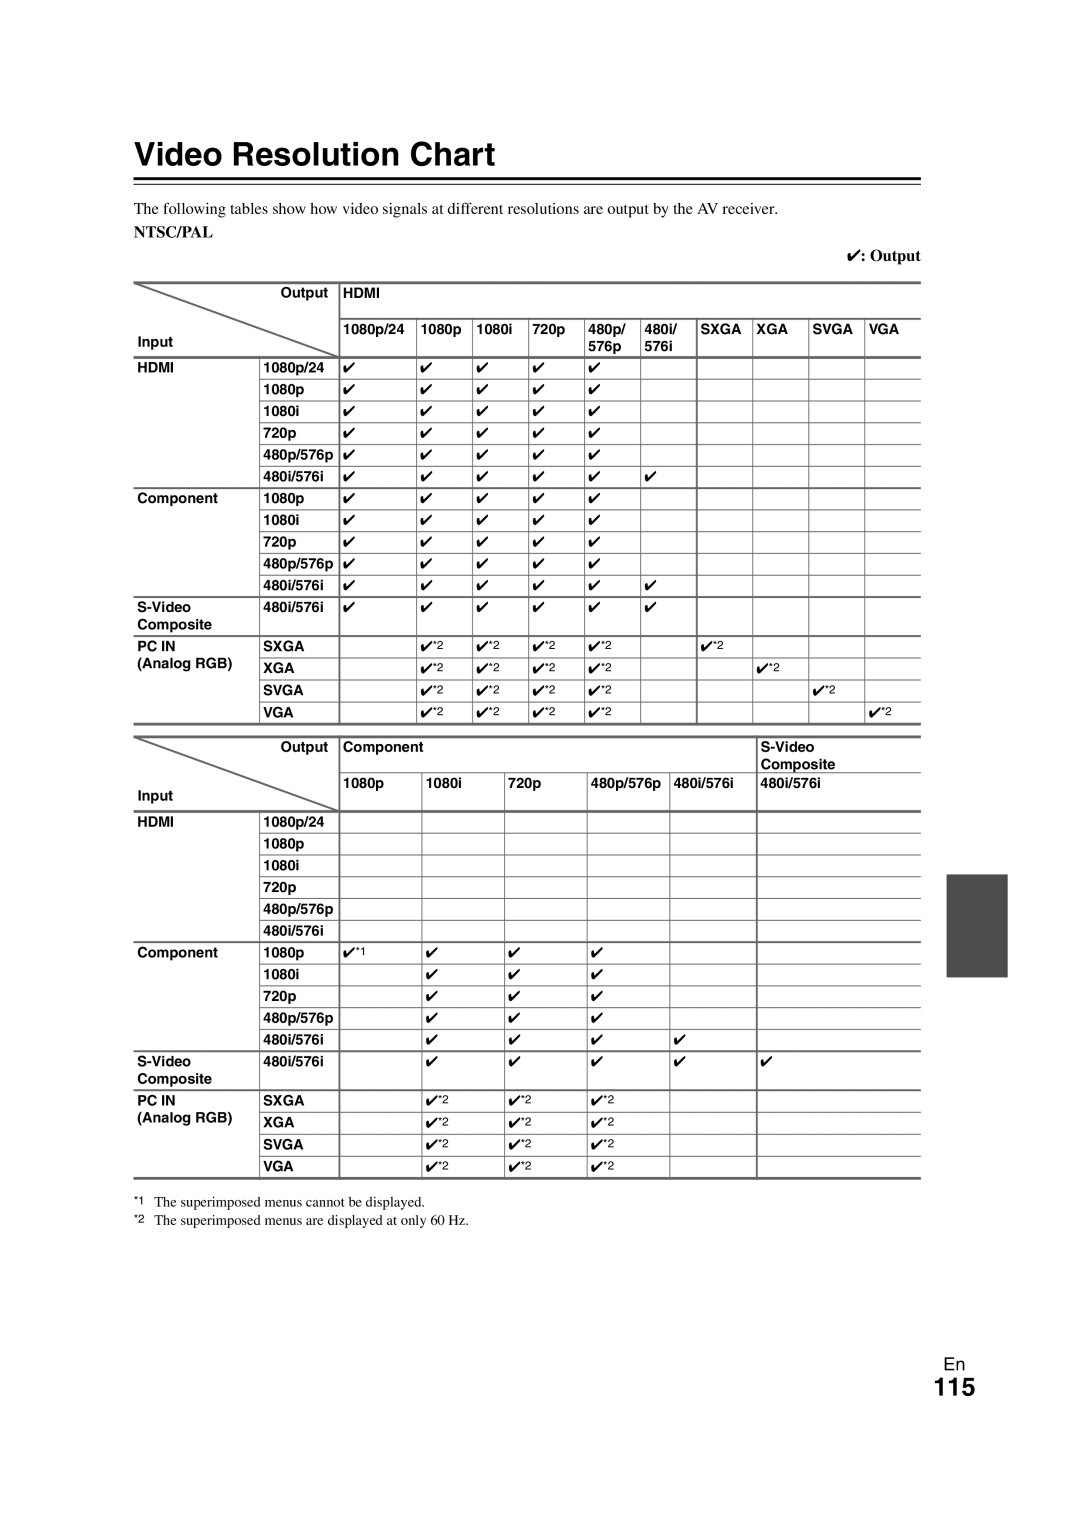 Onkyo TX-NR3008 instruction manual Video Resolution Chart, Ntsc/Pal, Output 